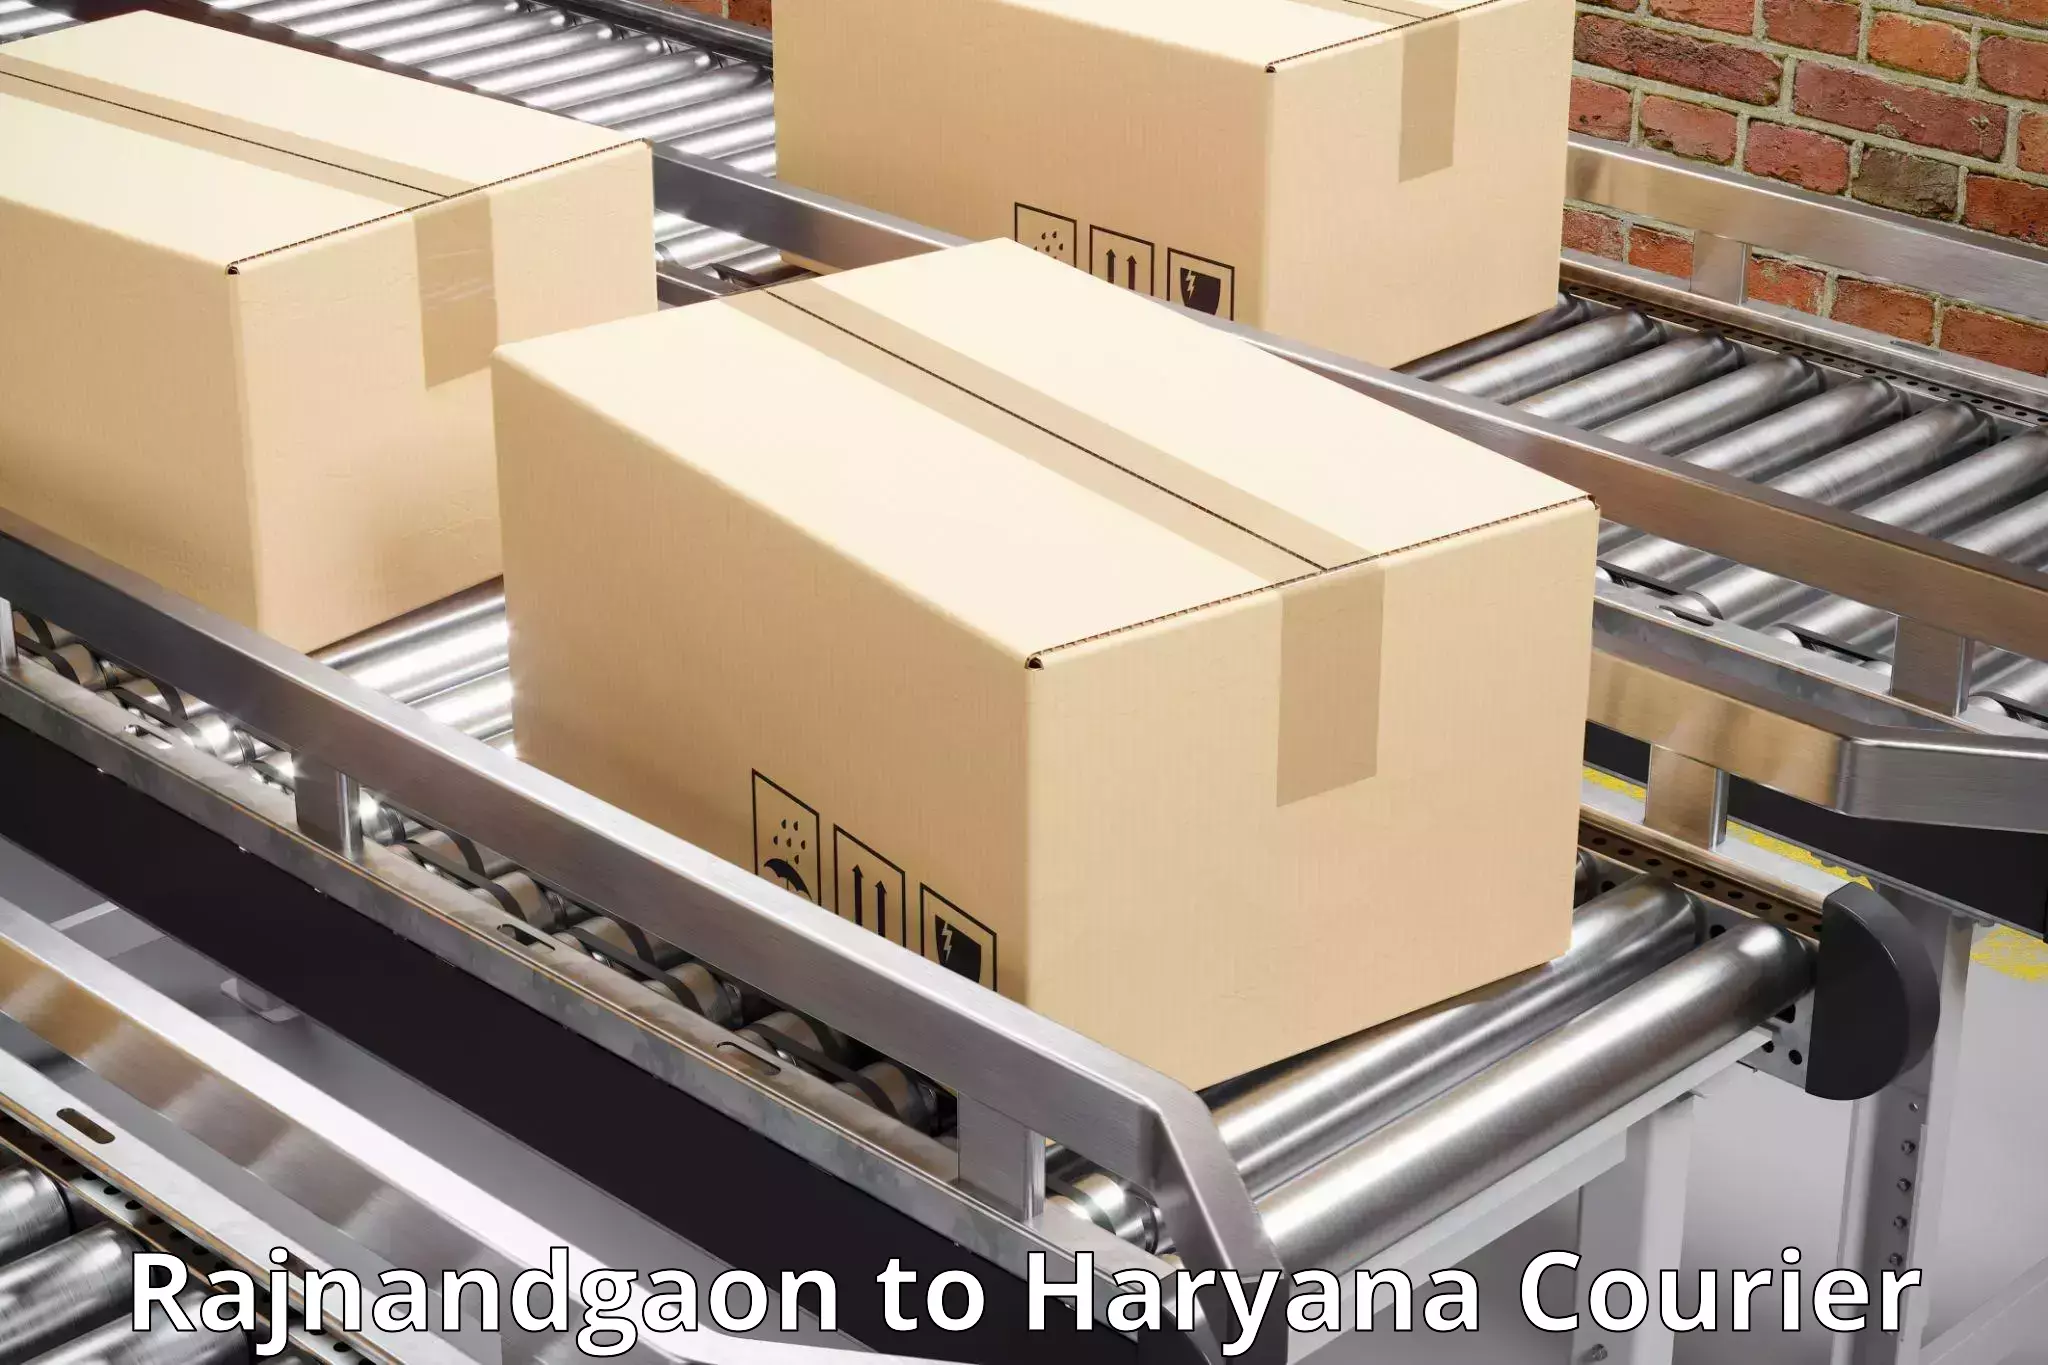 Courier service efficiency Rajnandgaon to Charkhari